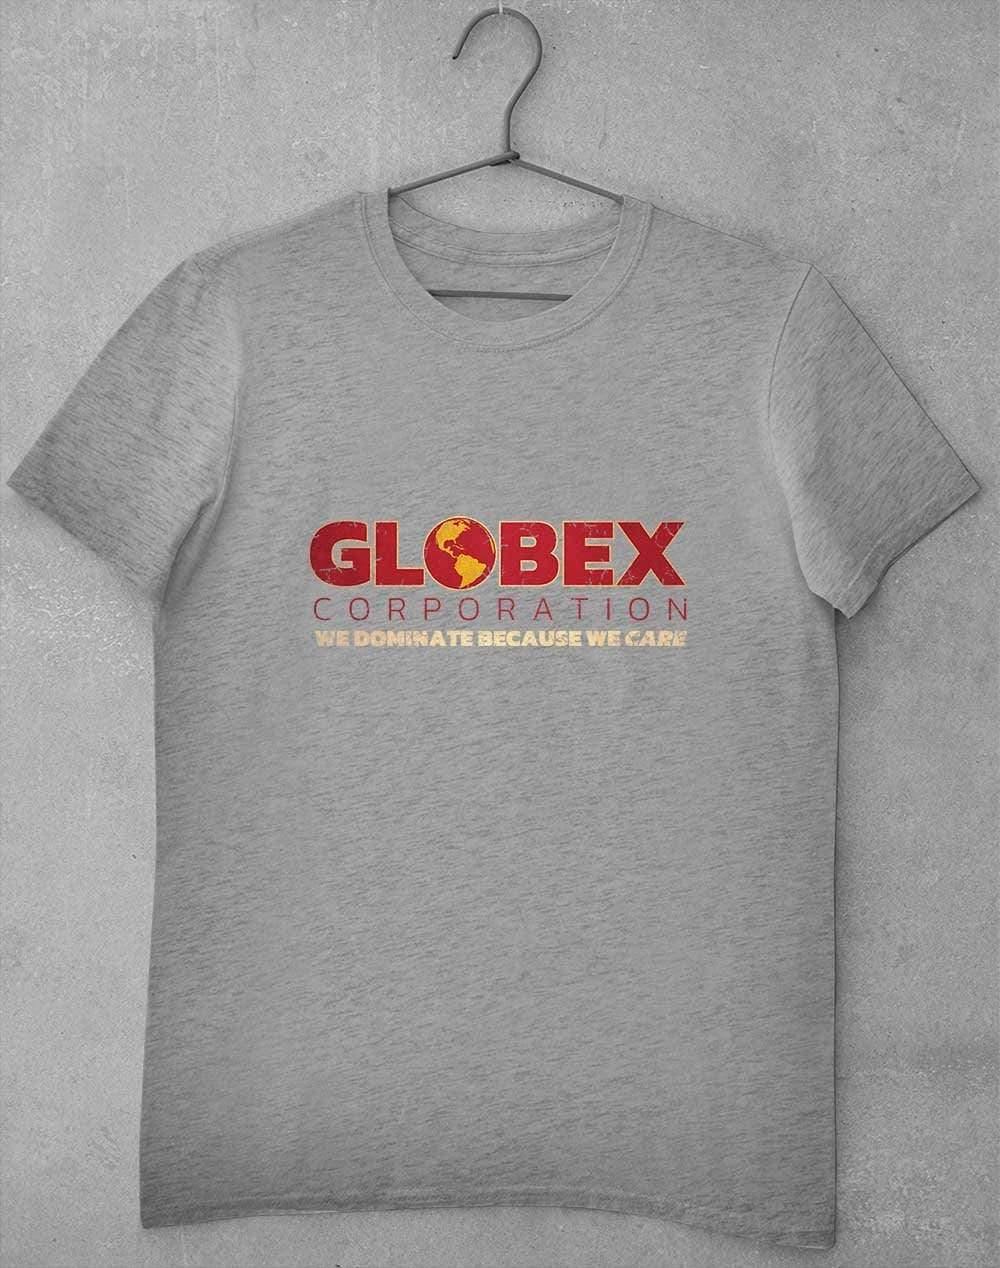 Globex Corporation T-Shirt S / Heather Grey  - Off World Tees